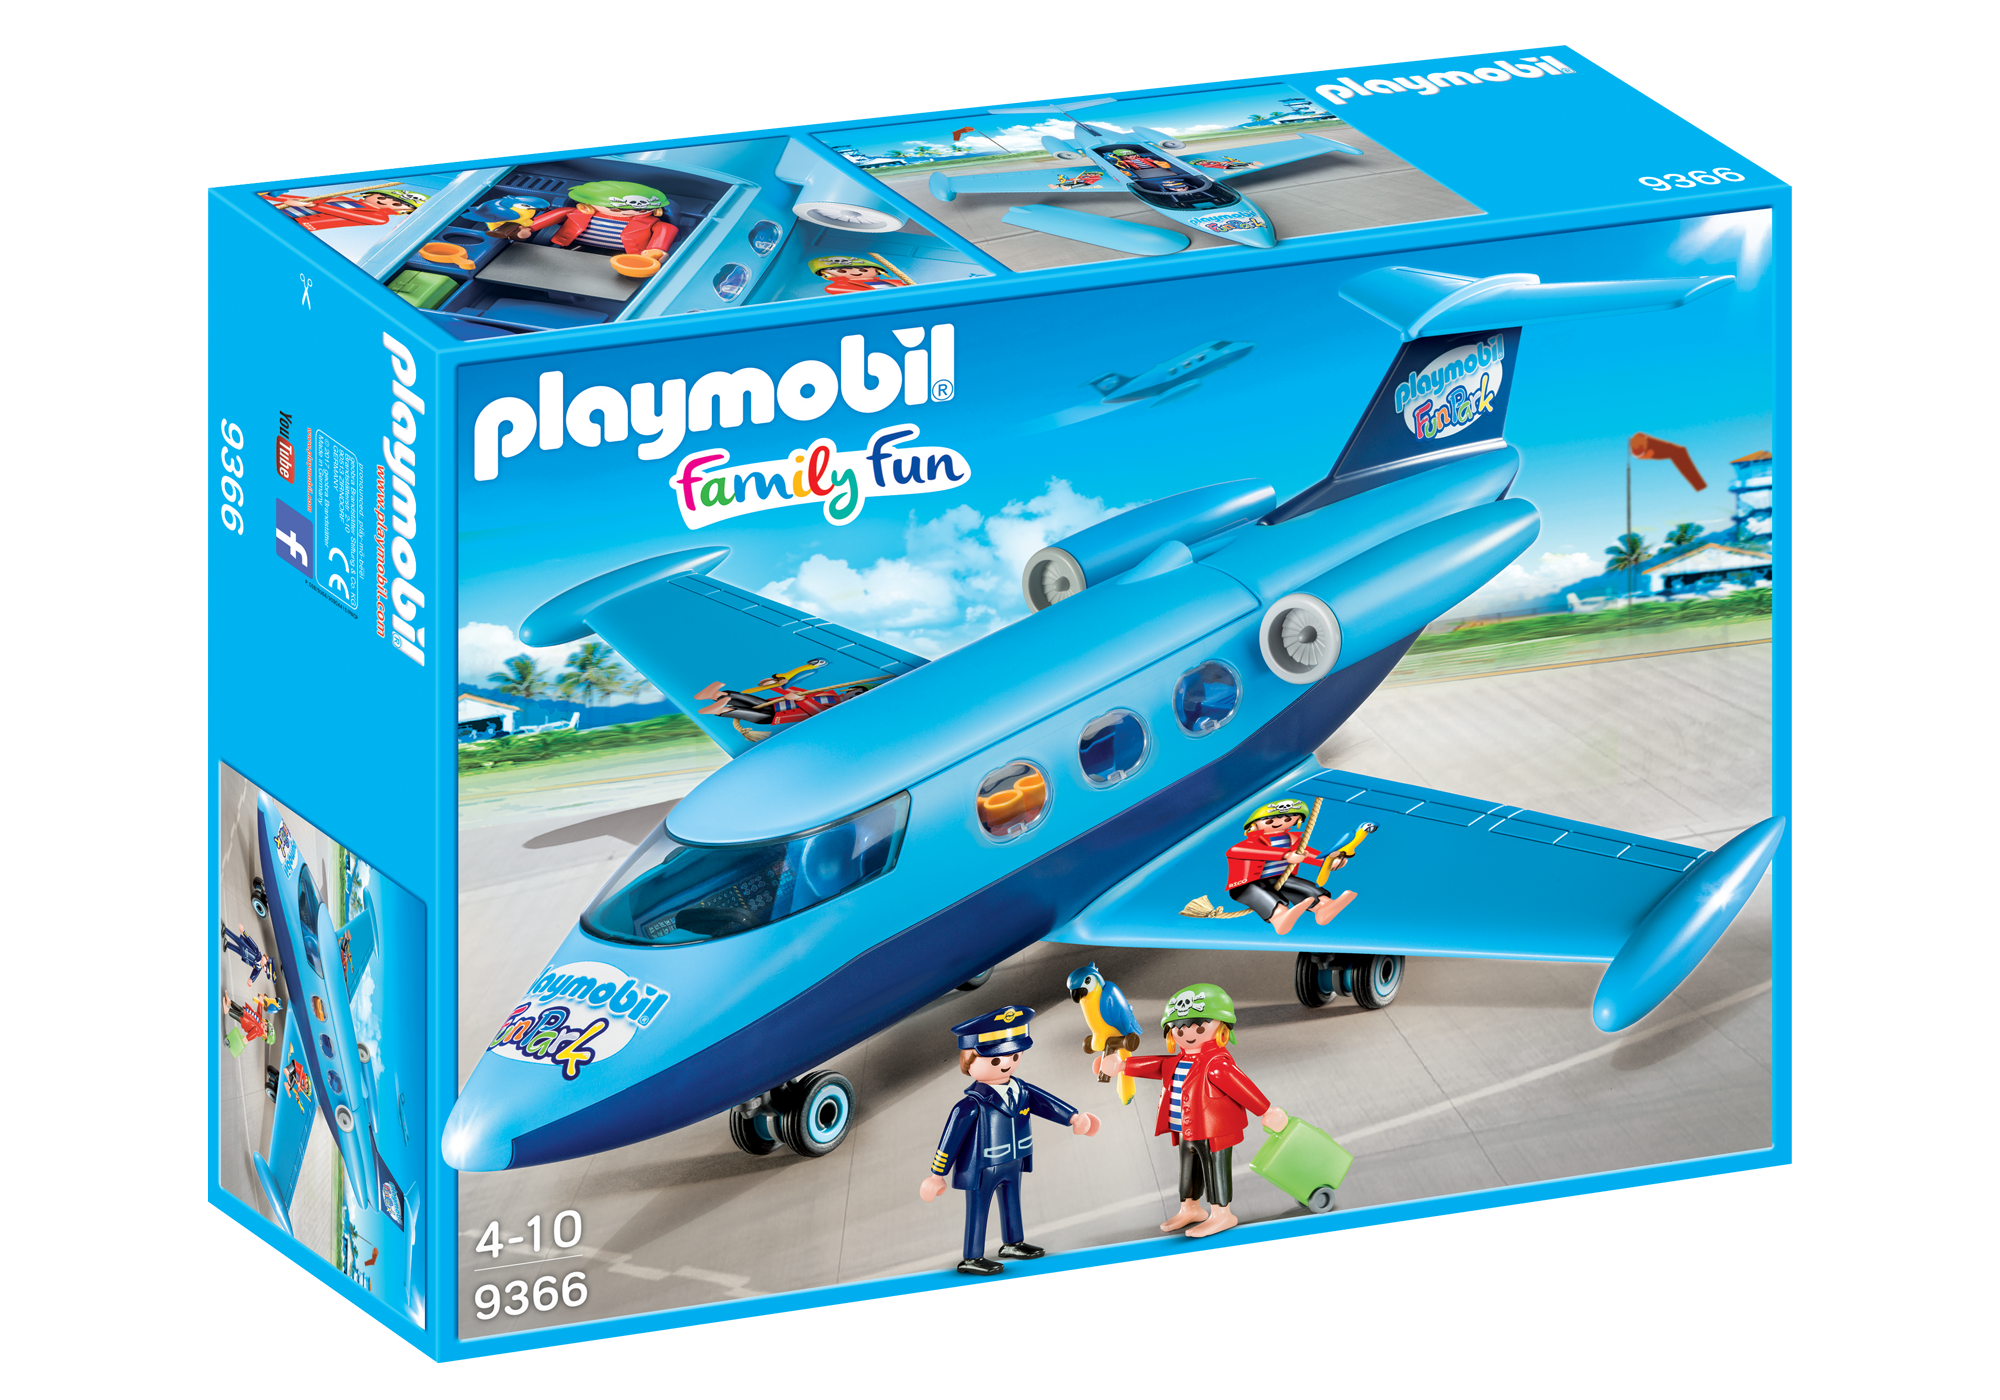 avion playmobil summer fun